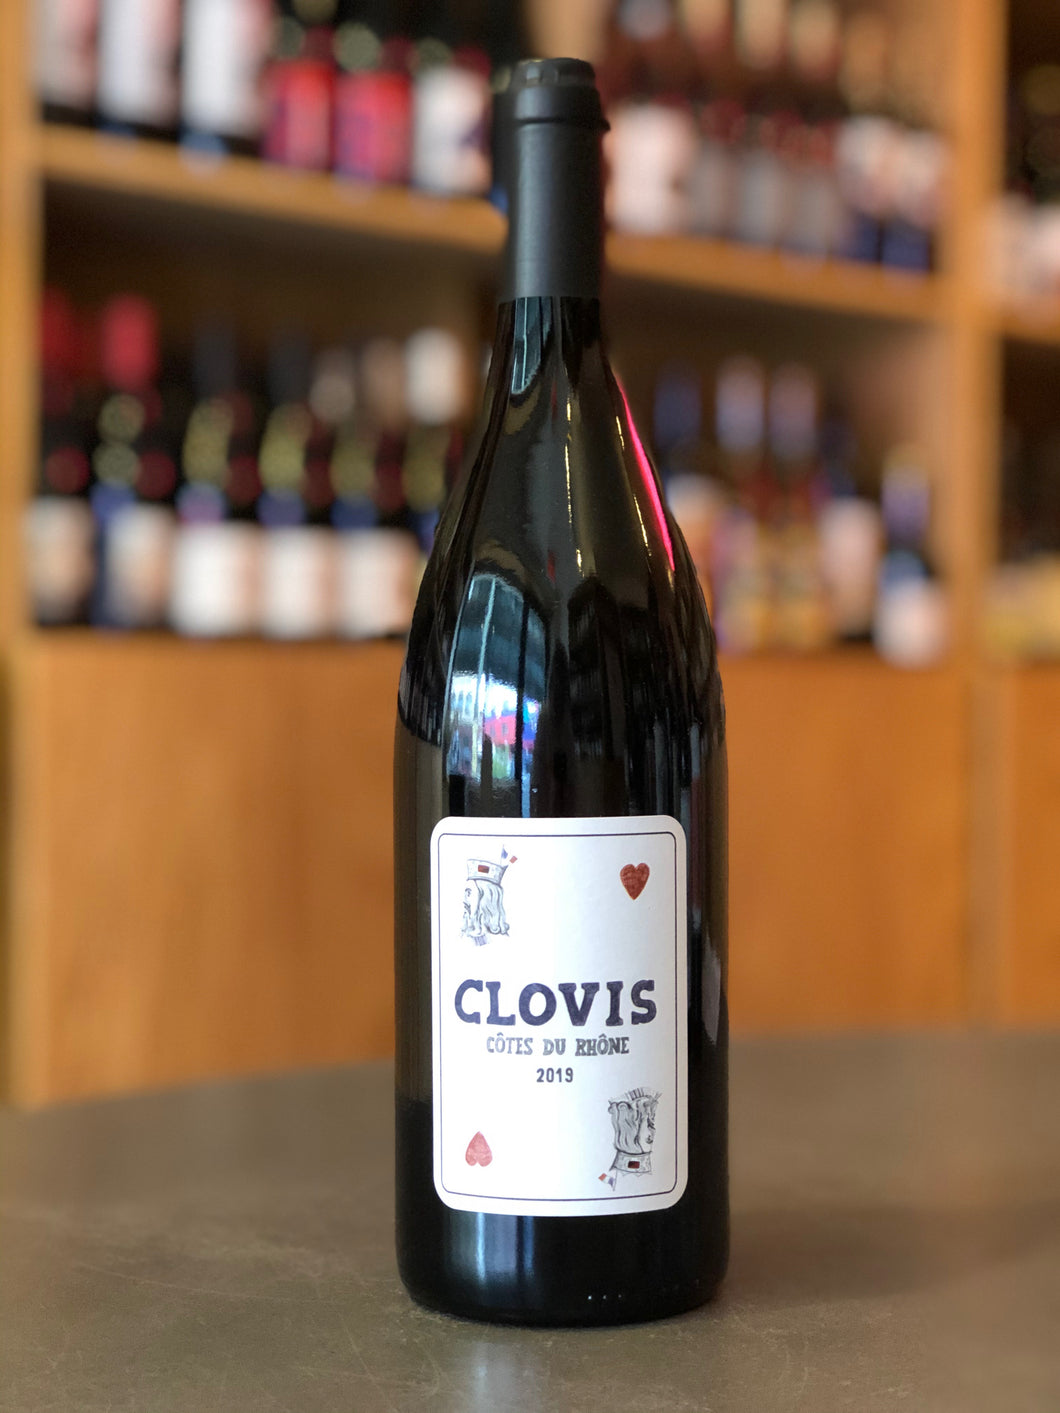 Clovis Wines, Cotes du Rhone (2019)